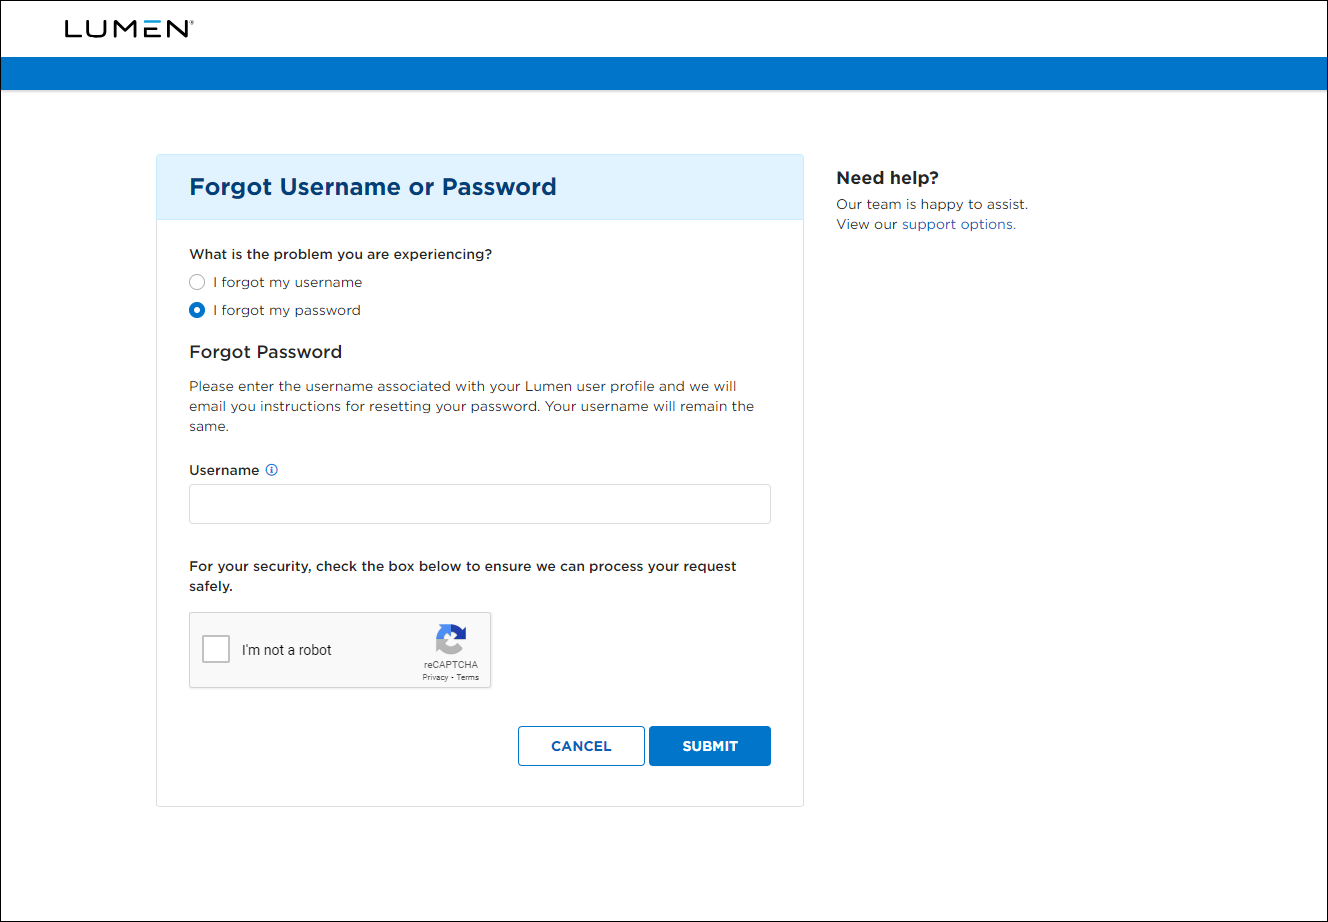 Forgot Username or Password (showing Forgot Password selected)